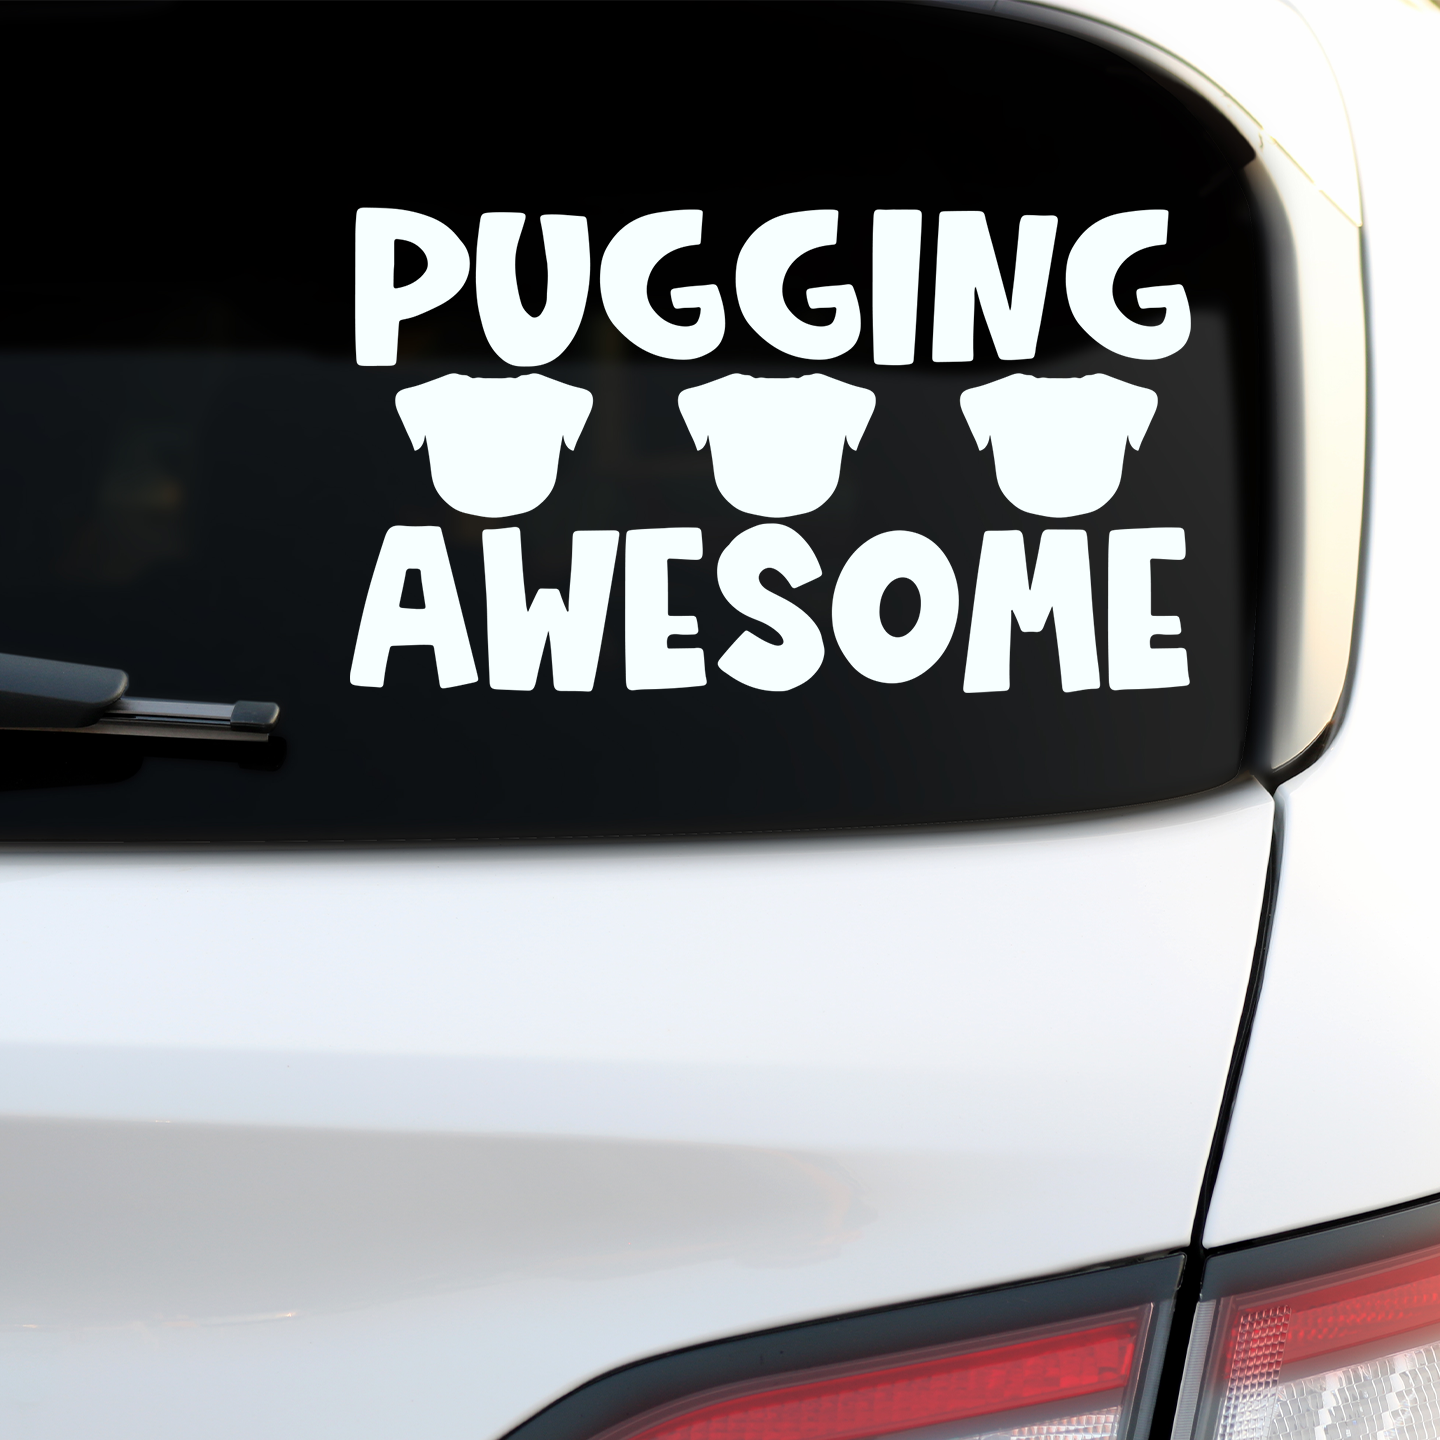 Pugging Awesome Pug Sticker